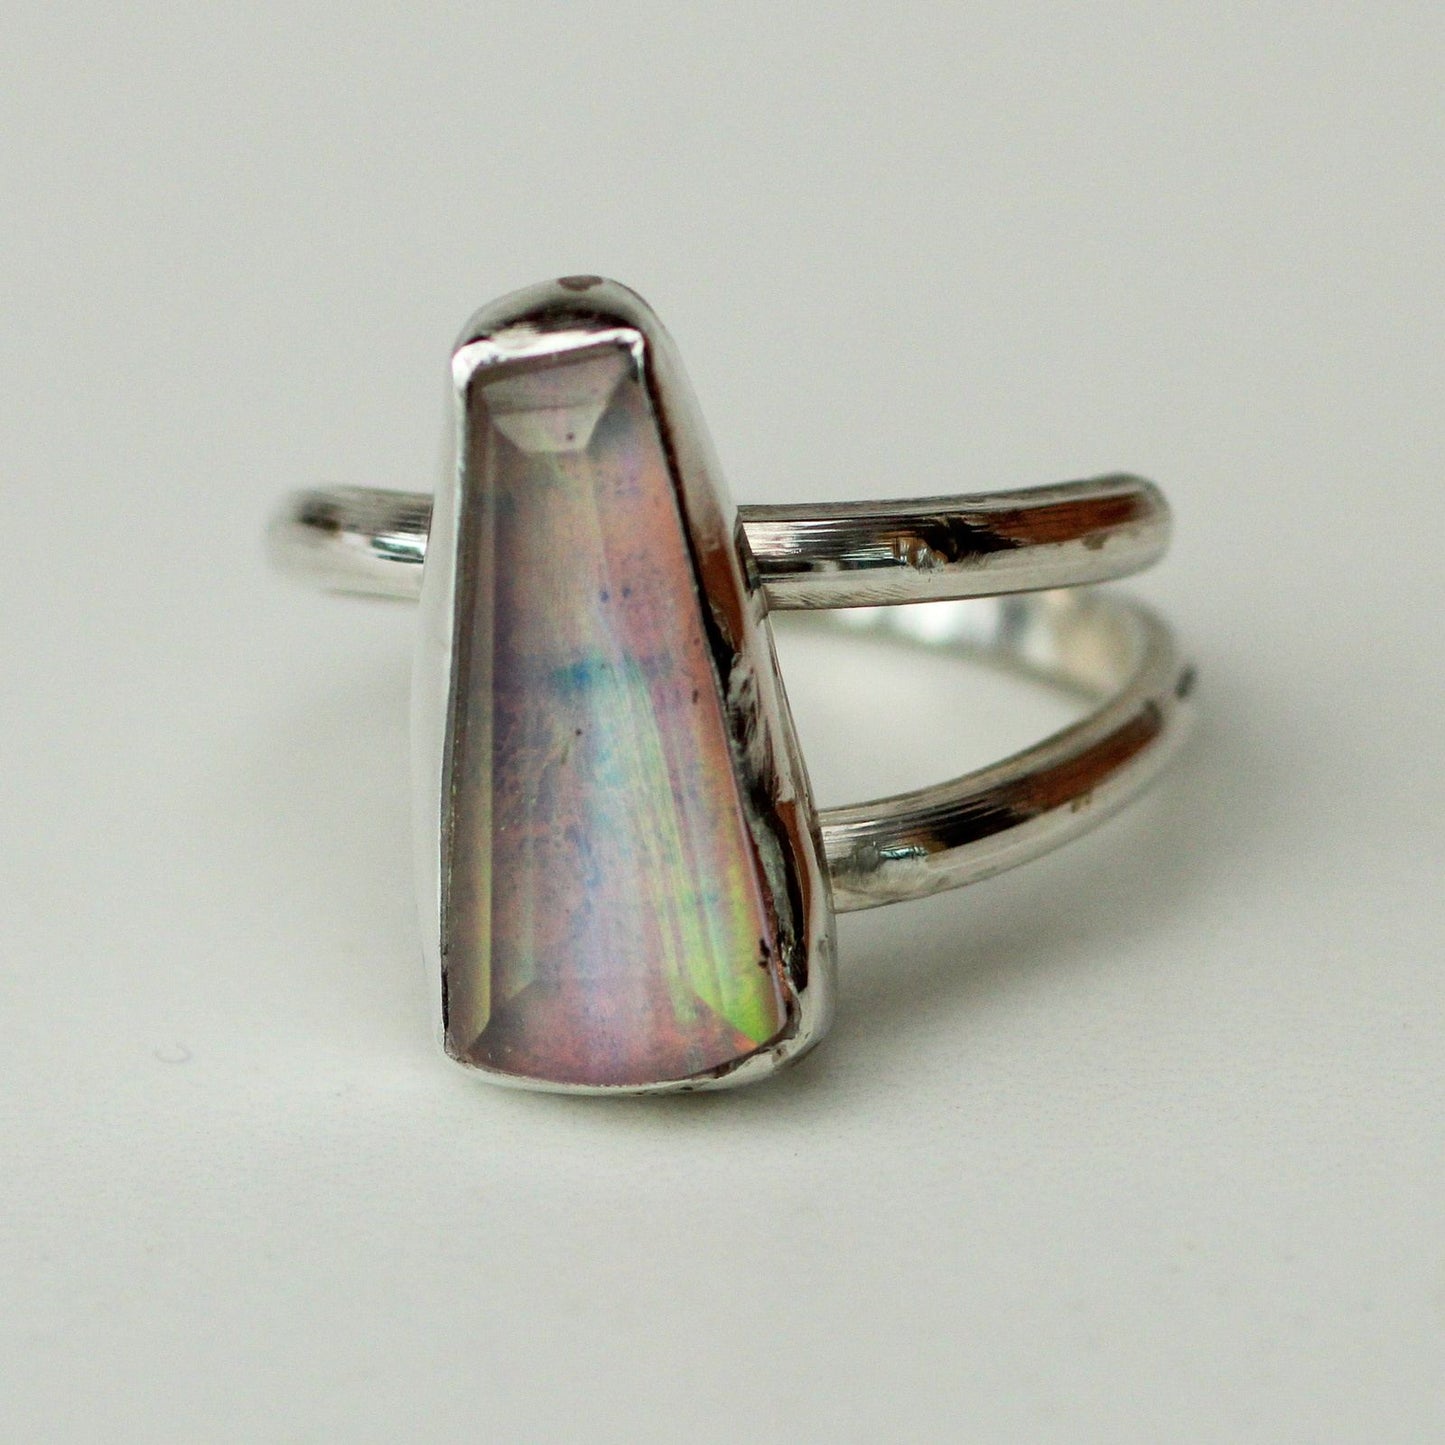 Pink & green flash opal ring louella-jewellery